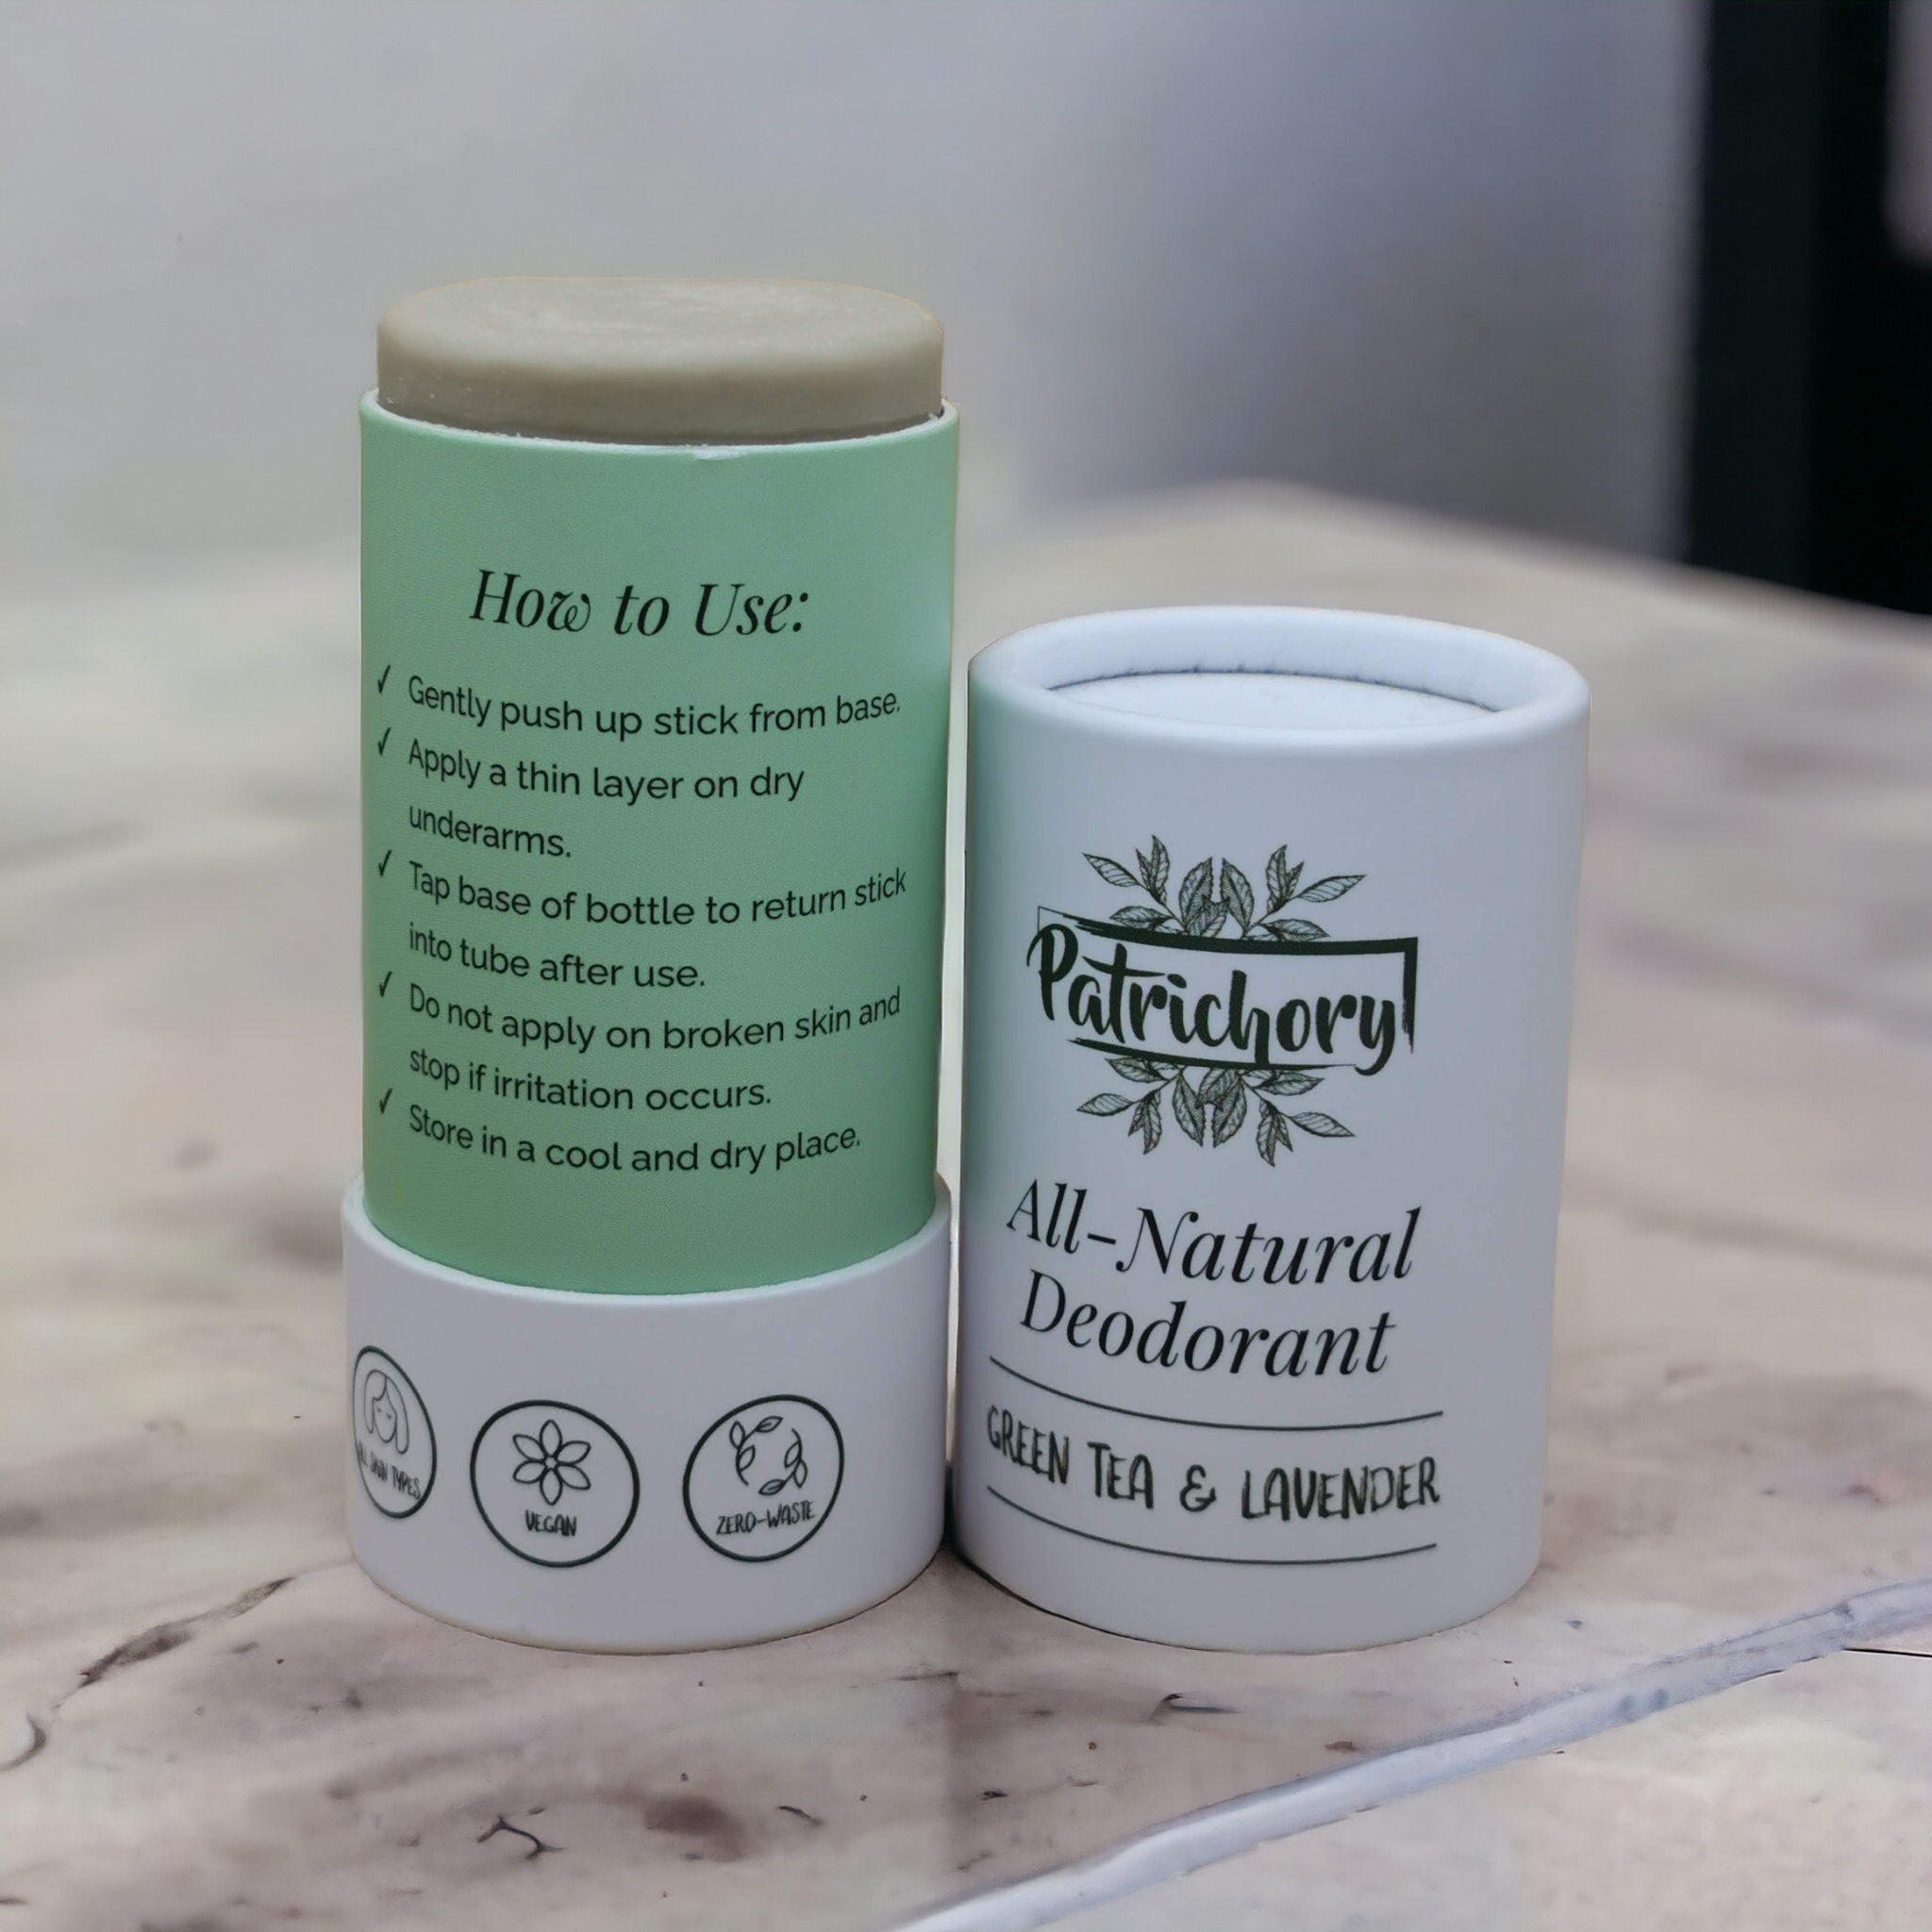 Patrichory Natural Deodorant Green Tea & Lavender